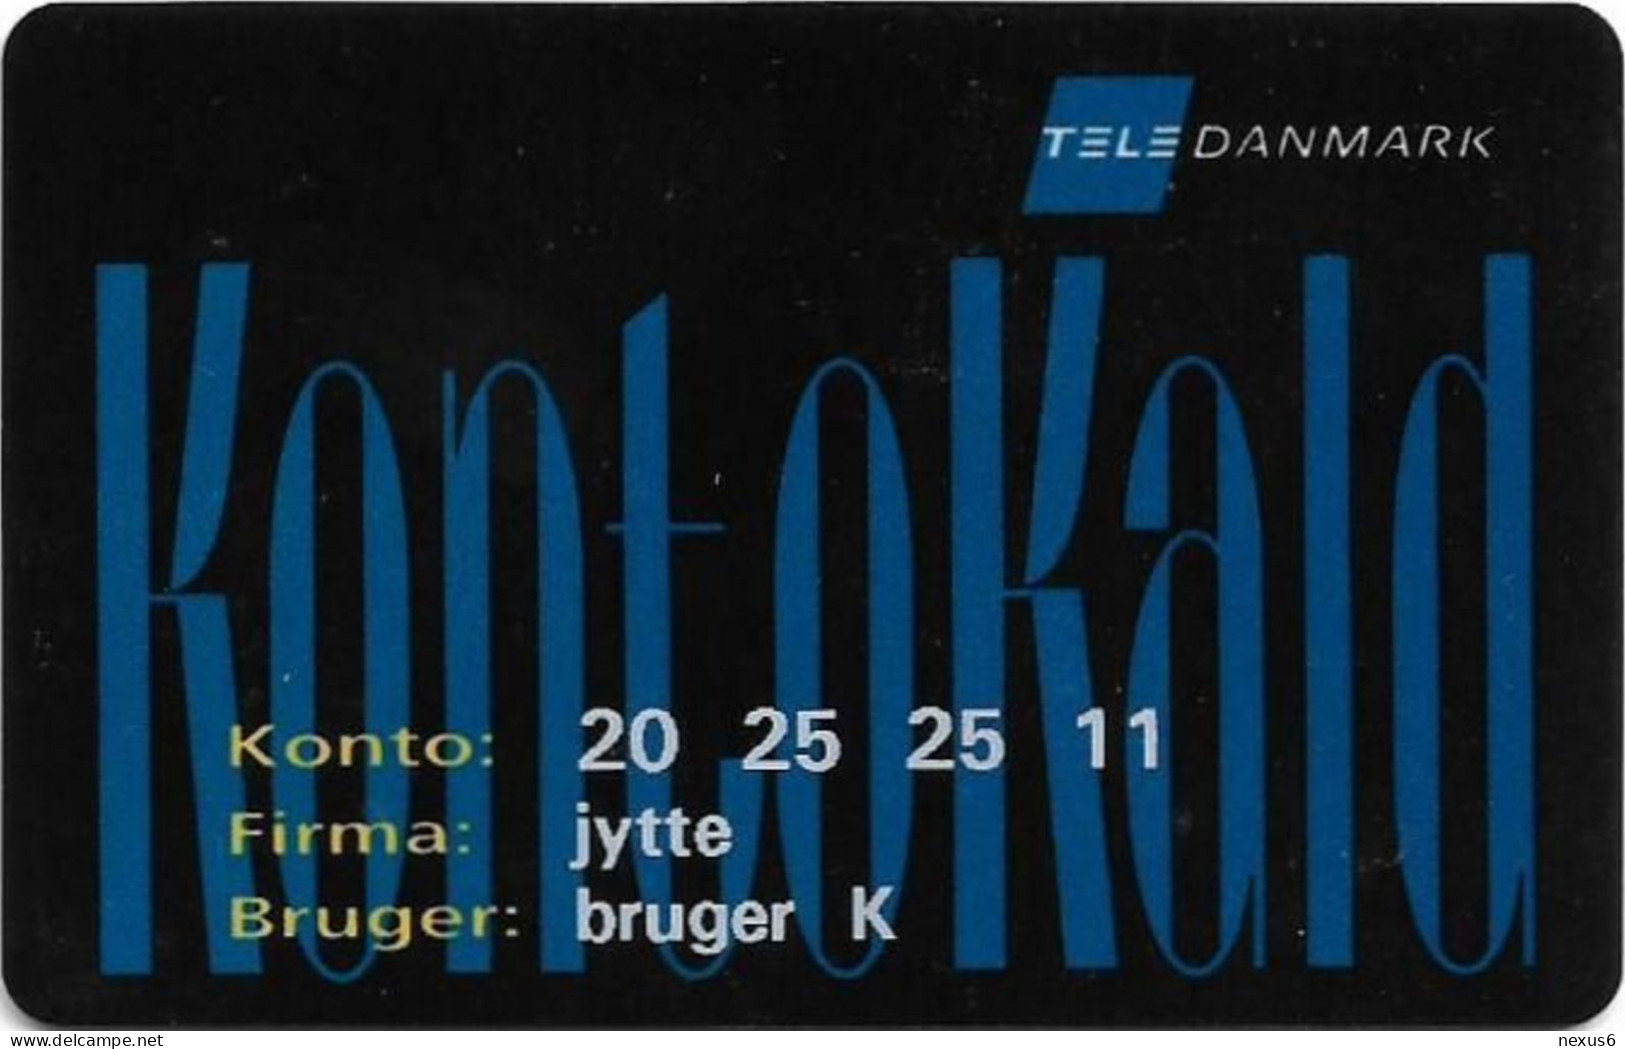 Denmark - Tele Danmark - KON-DEN-003 - Kontokald (Blue) Magnetic Creditcard, Used - Denemarken